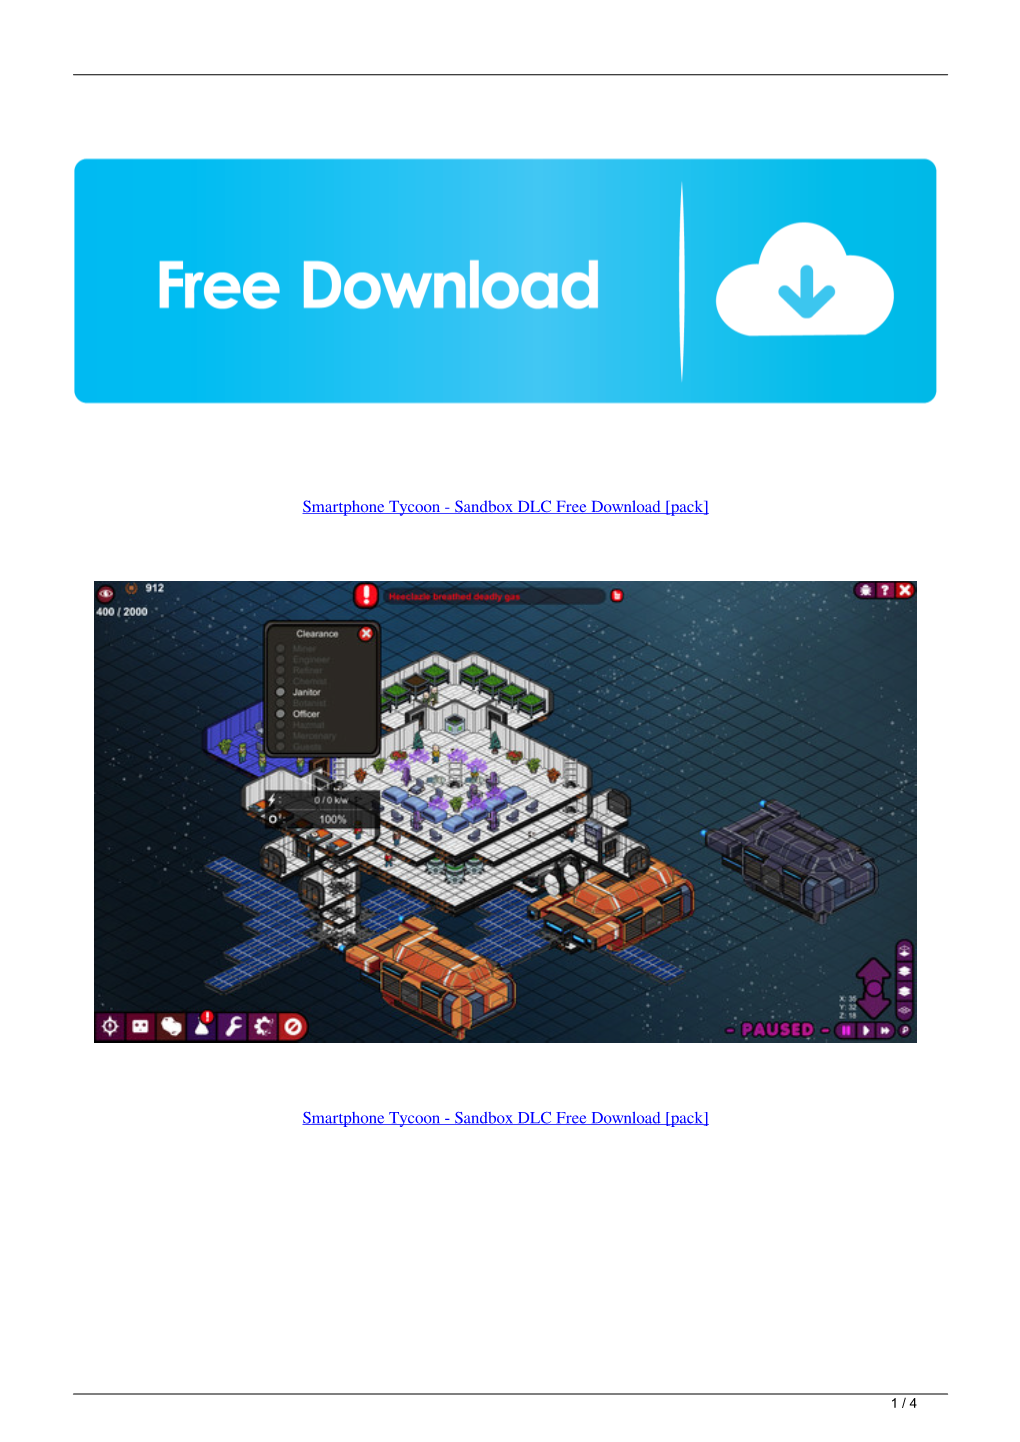 Smartphone Tycoon Sandbox DLC Free Download Pack